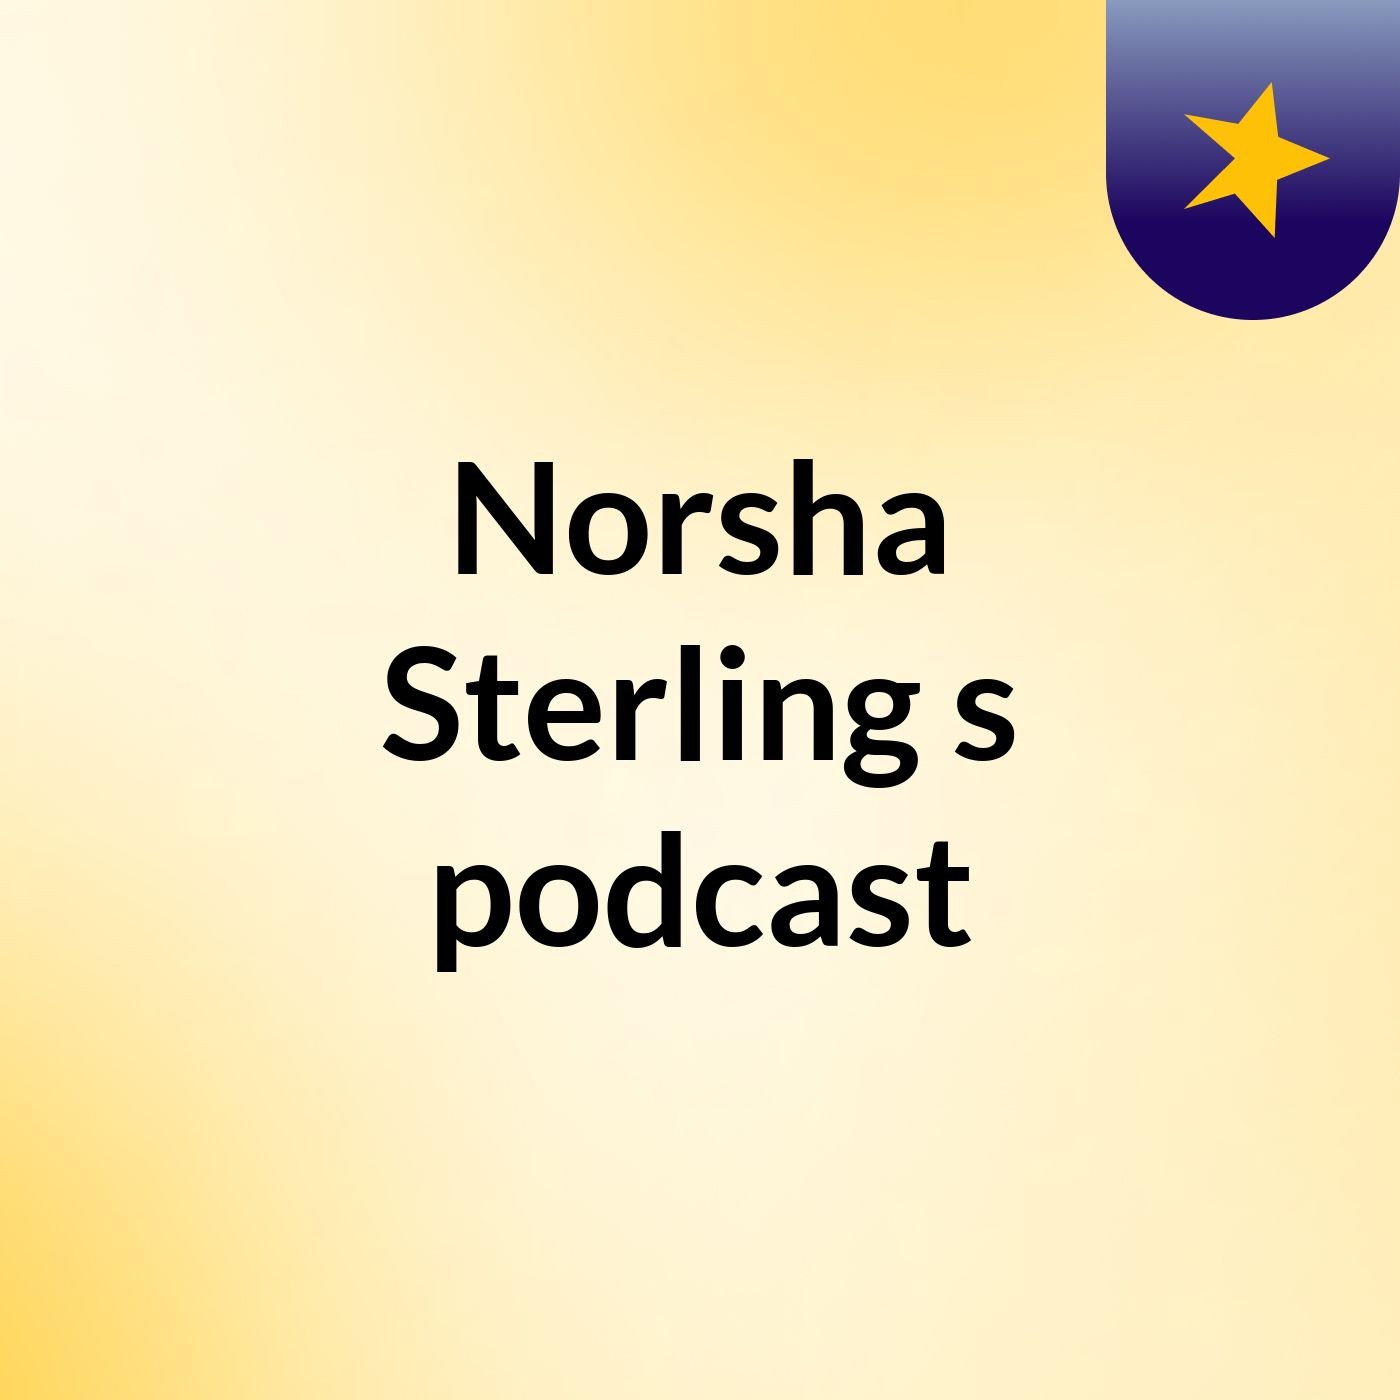 Episode 2 - Norsha Sterling's podcast